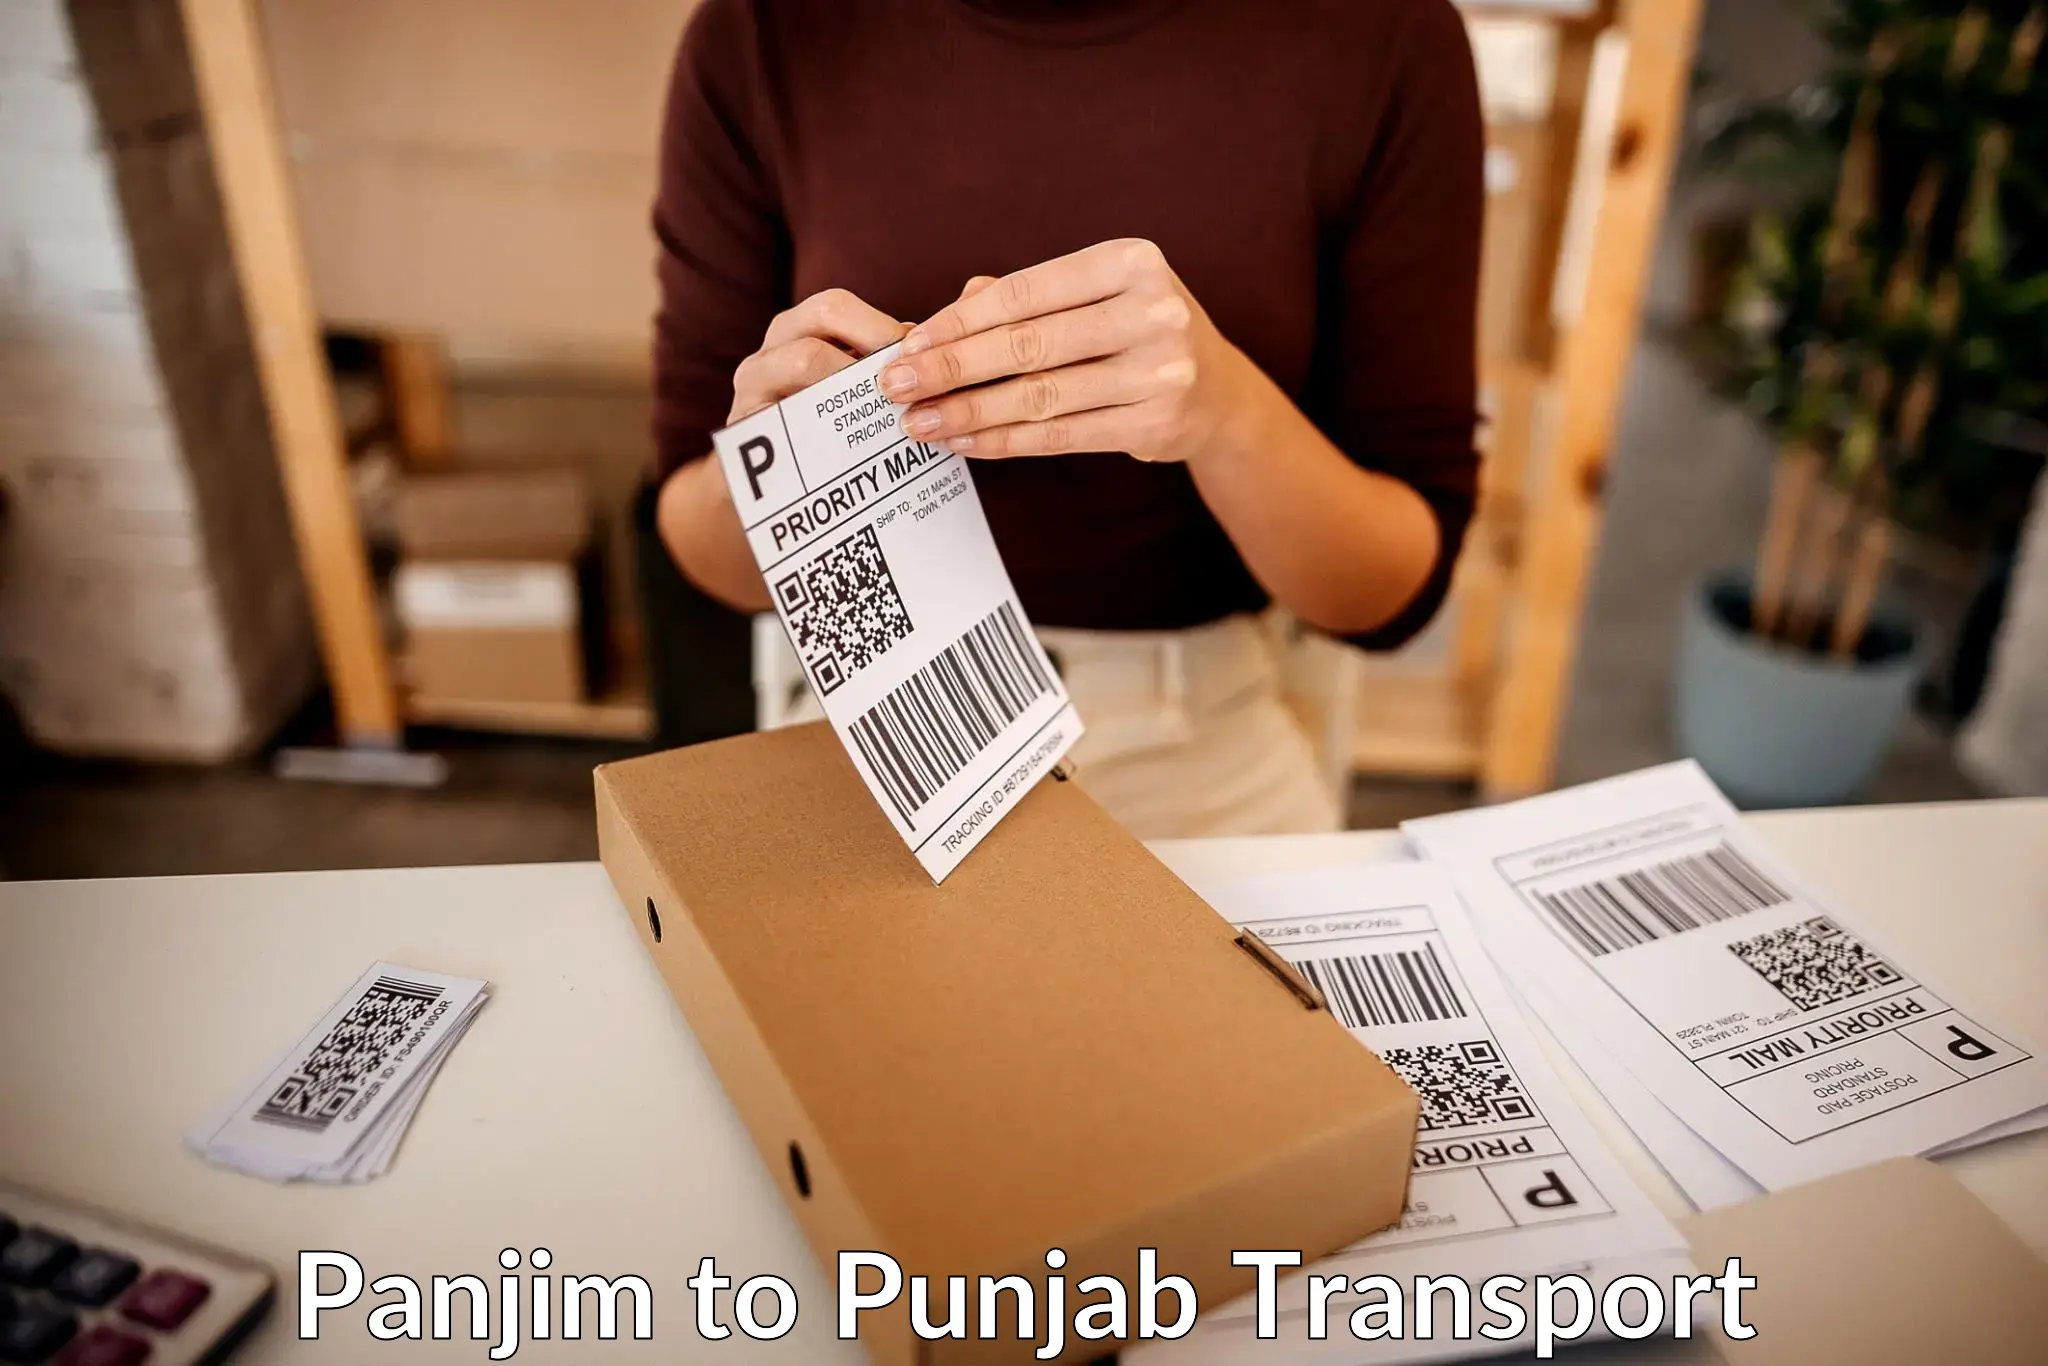 Shipping partner Panjim to Mohali